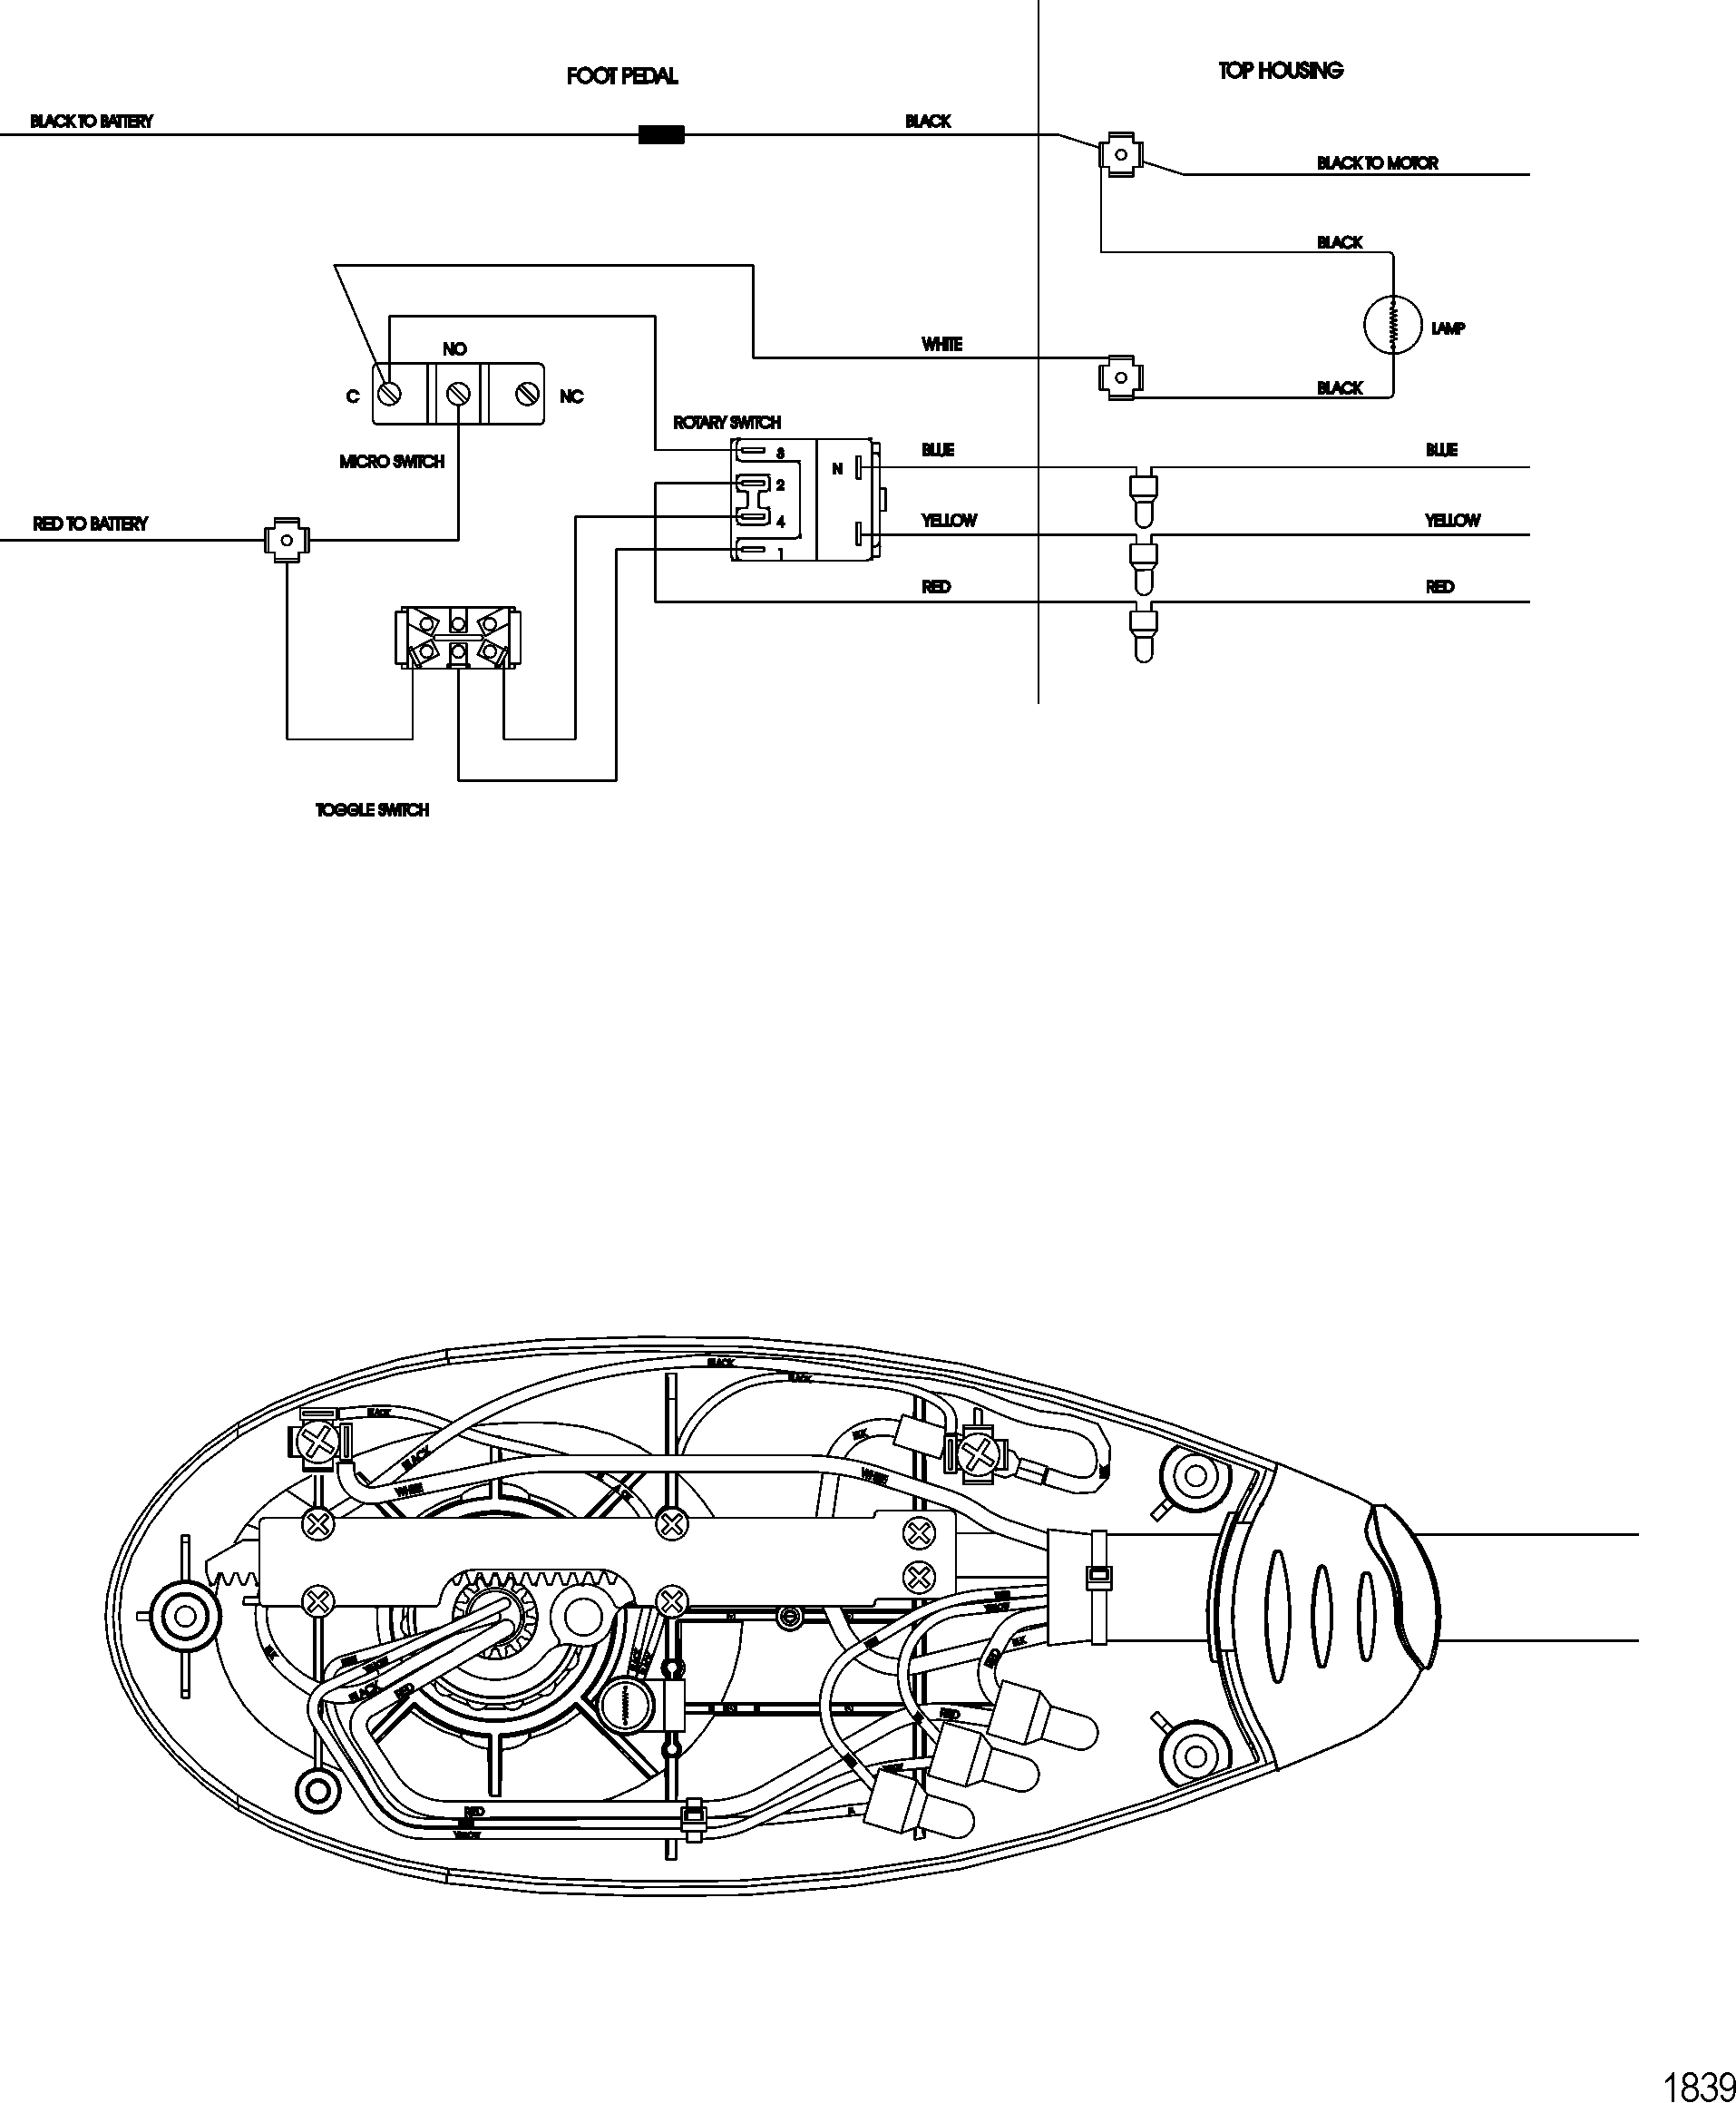 motorguide fw40db wiring diagram